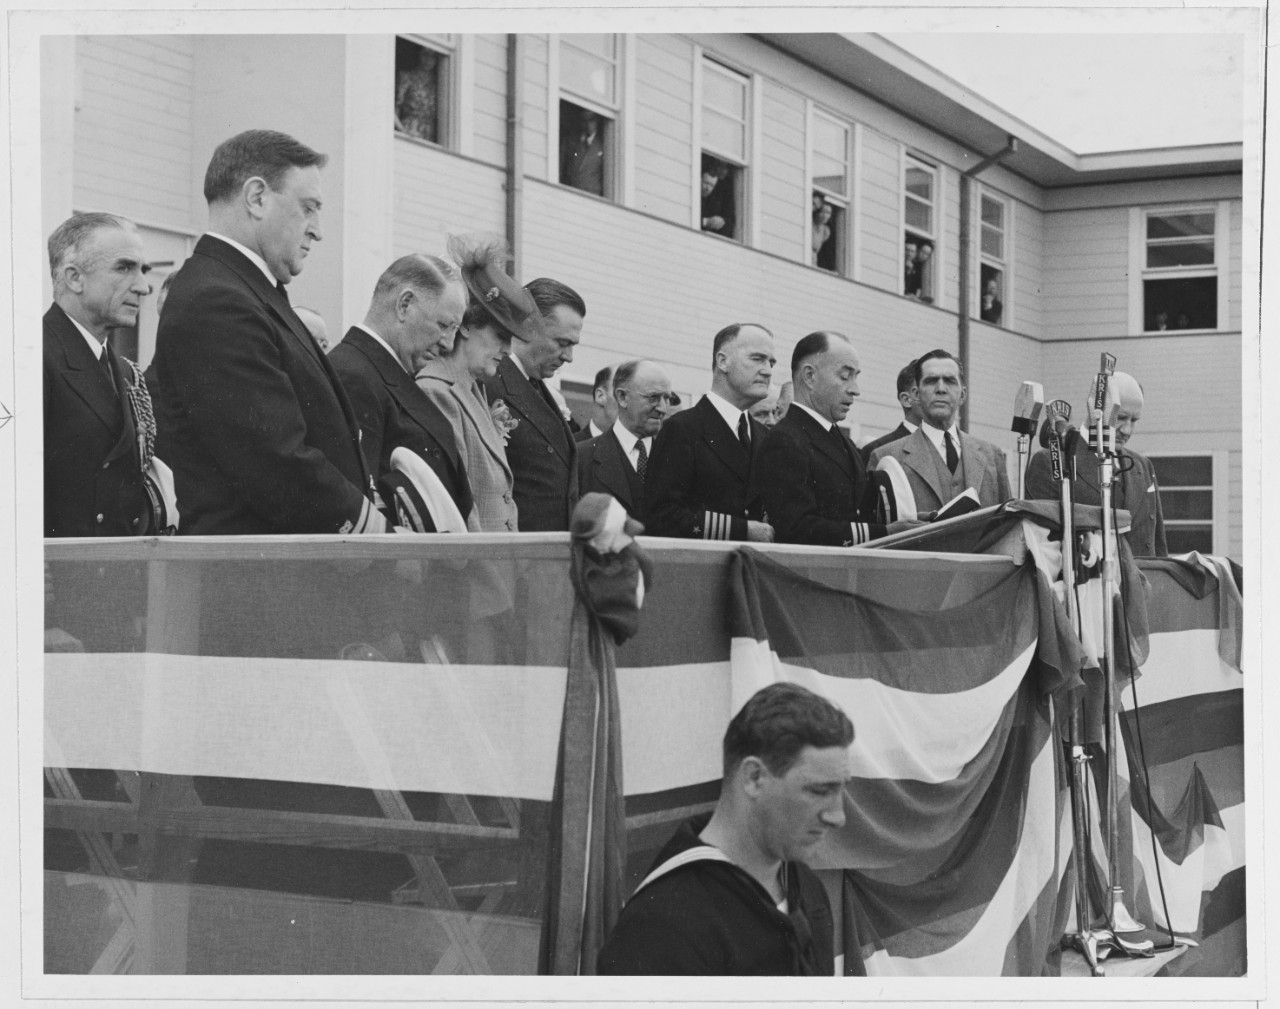 Benediction at Dedication Ceremonies, U.S. Naval Air Station, Corpus Christi, Texas. March 12, 1941. Captain M.L. Deyo